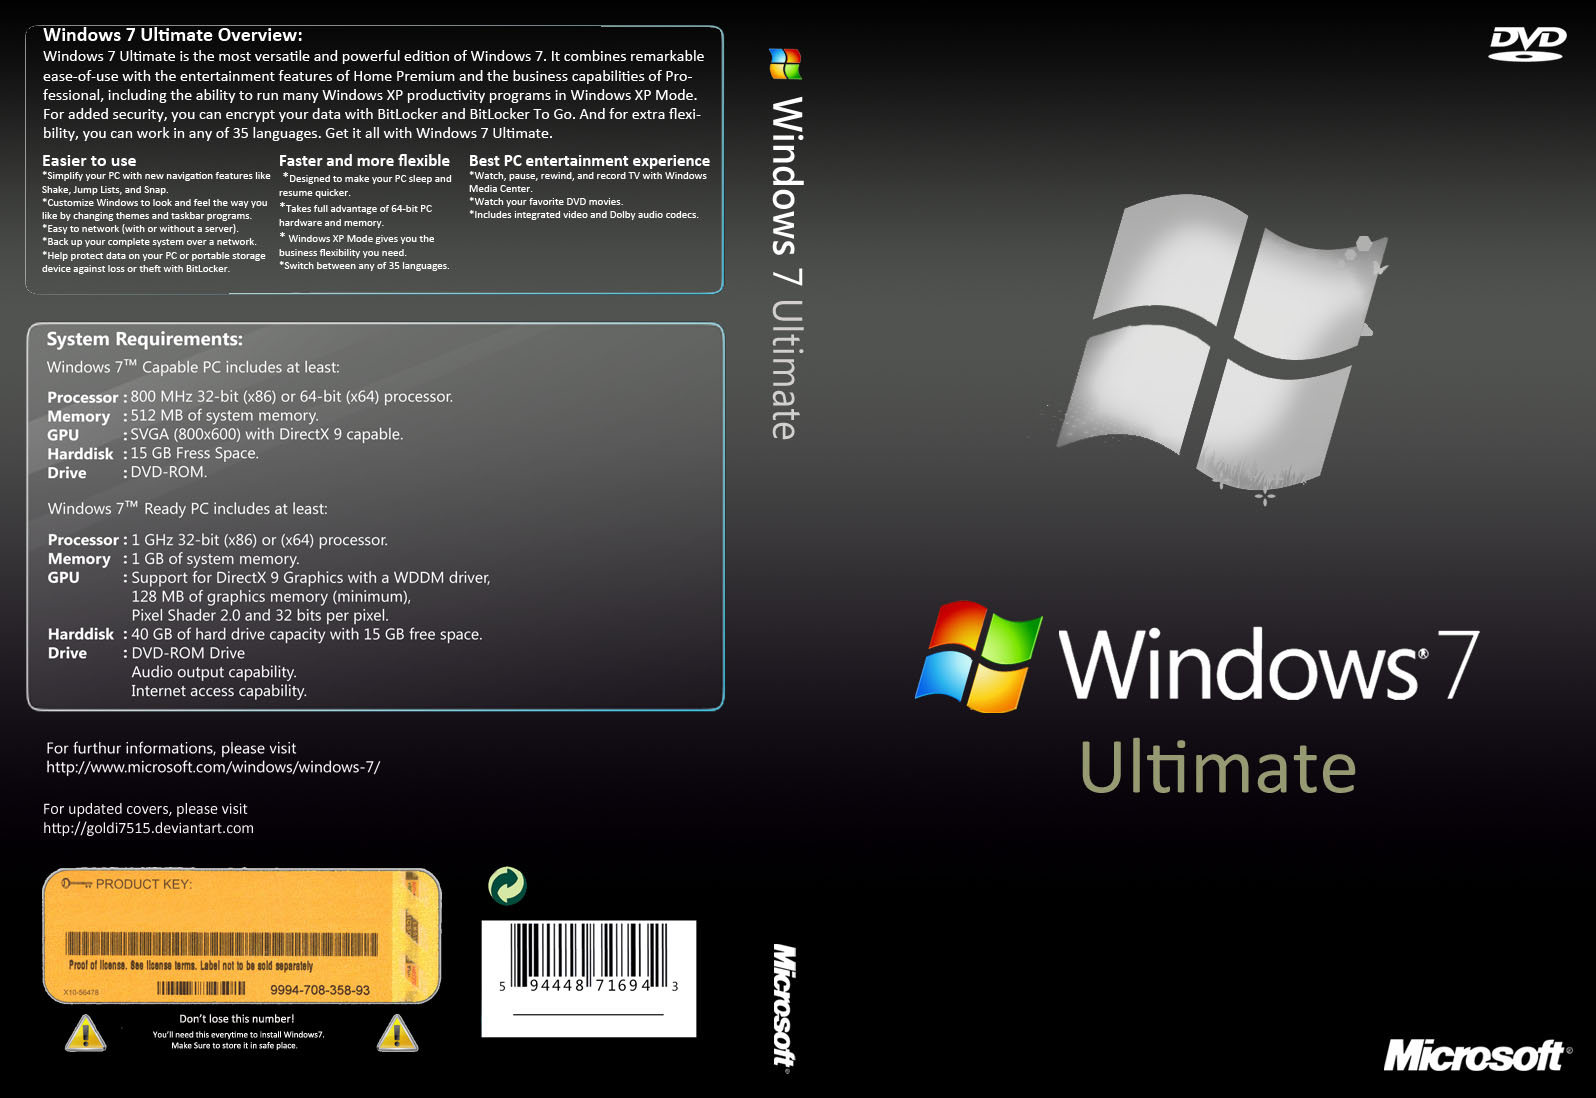 Windows 7 Ultimate price